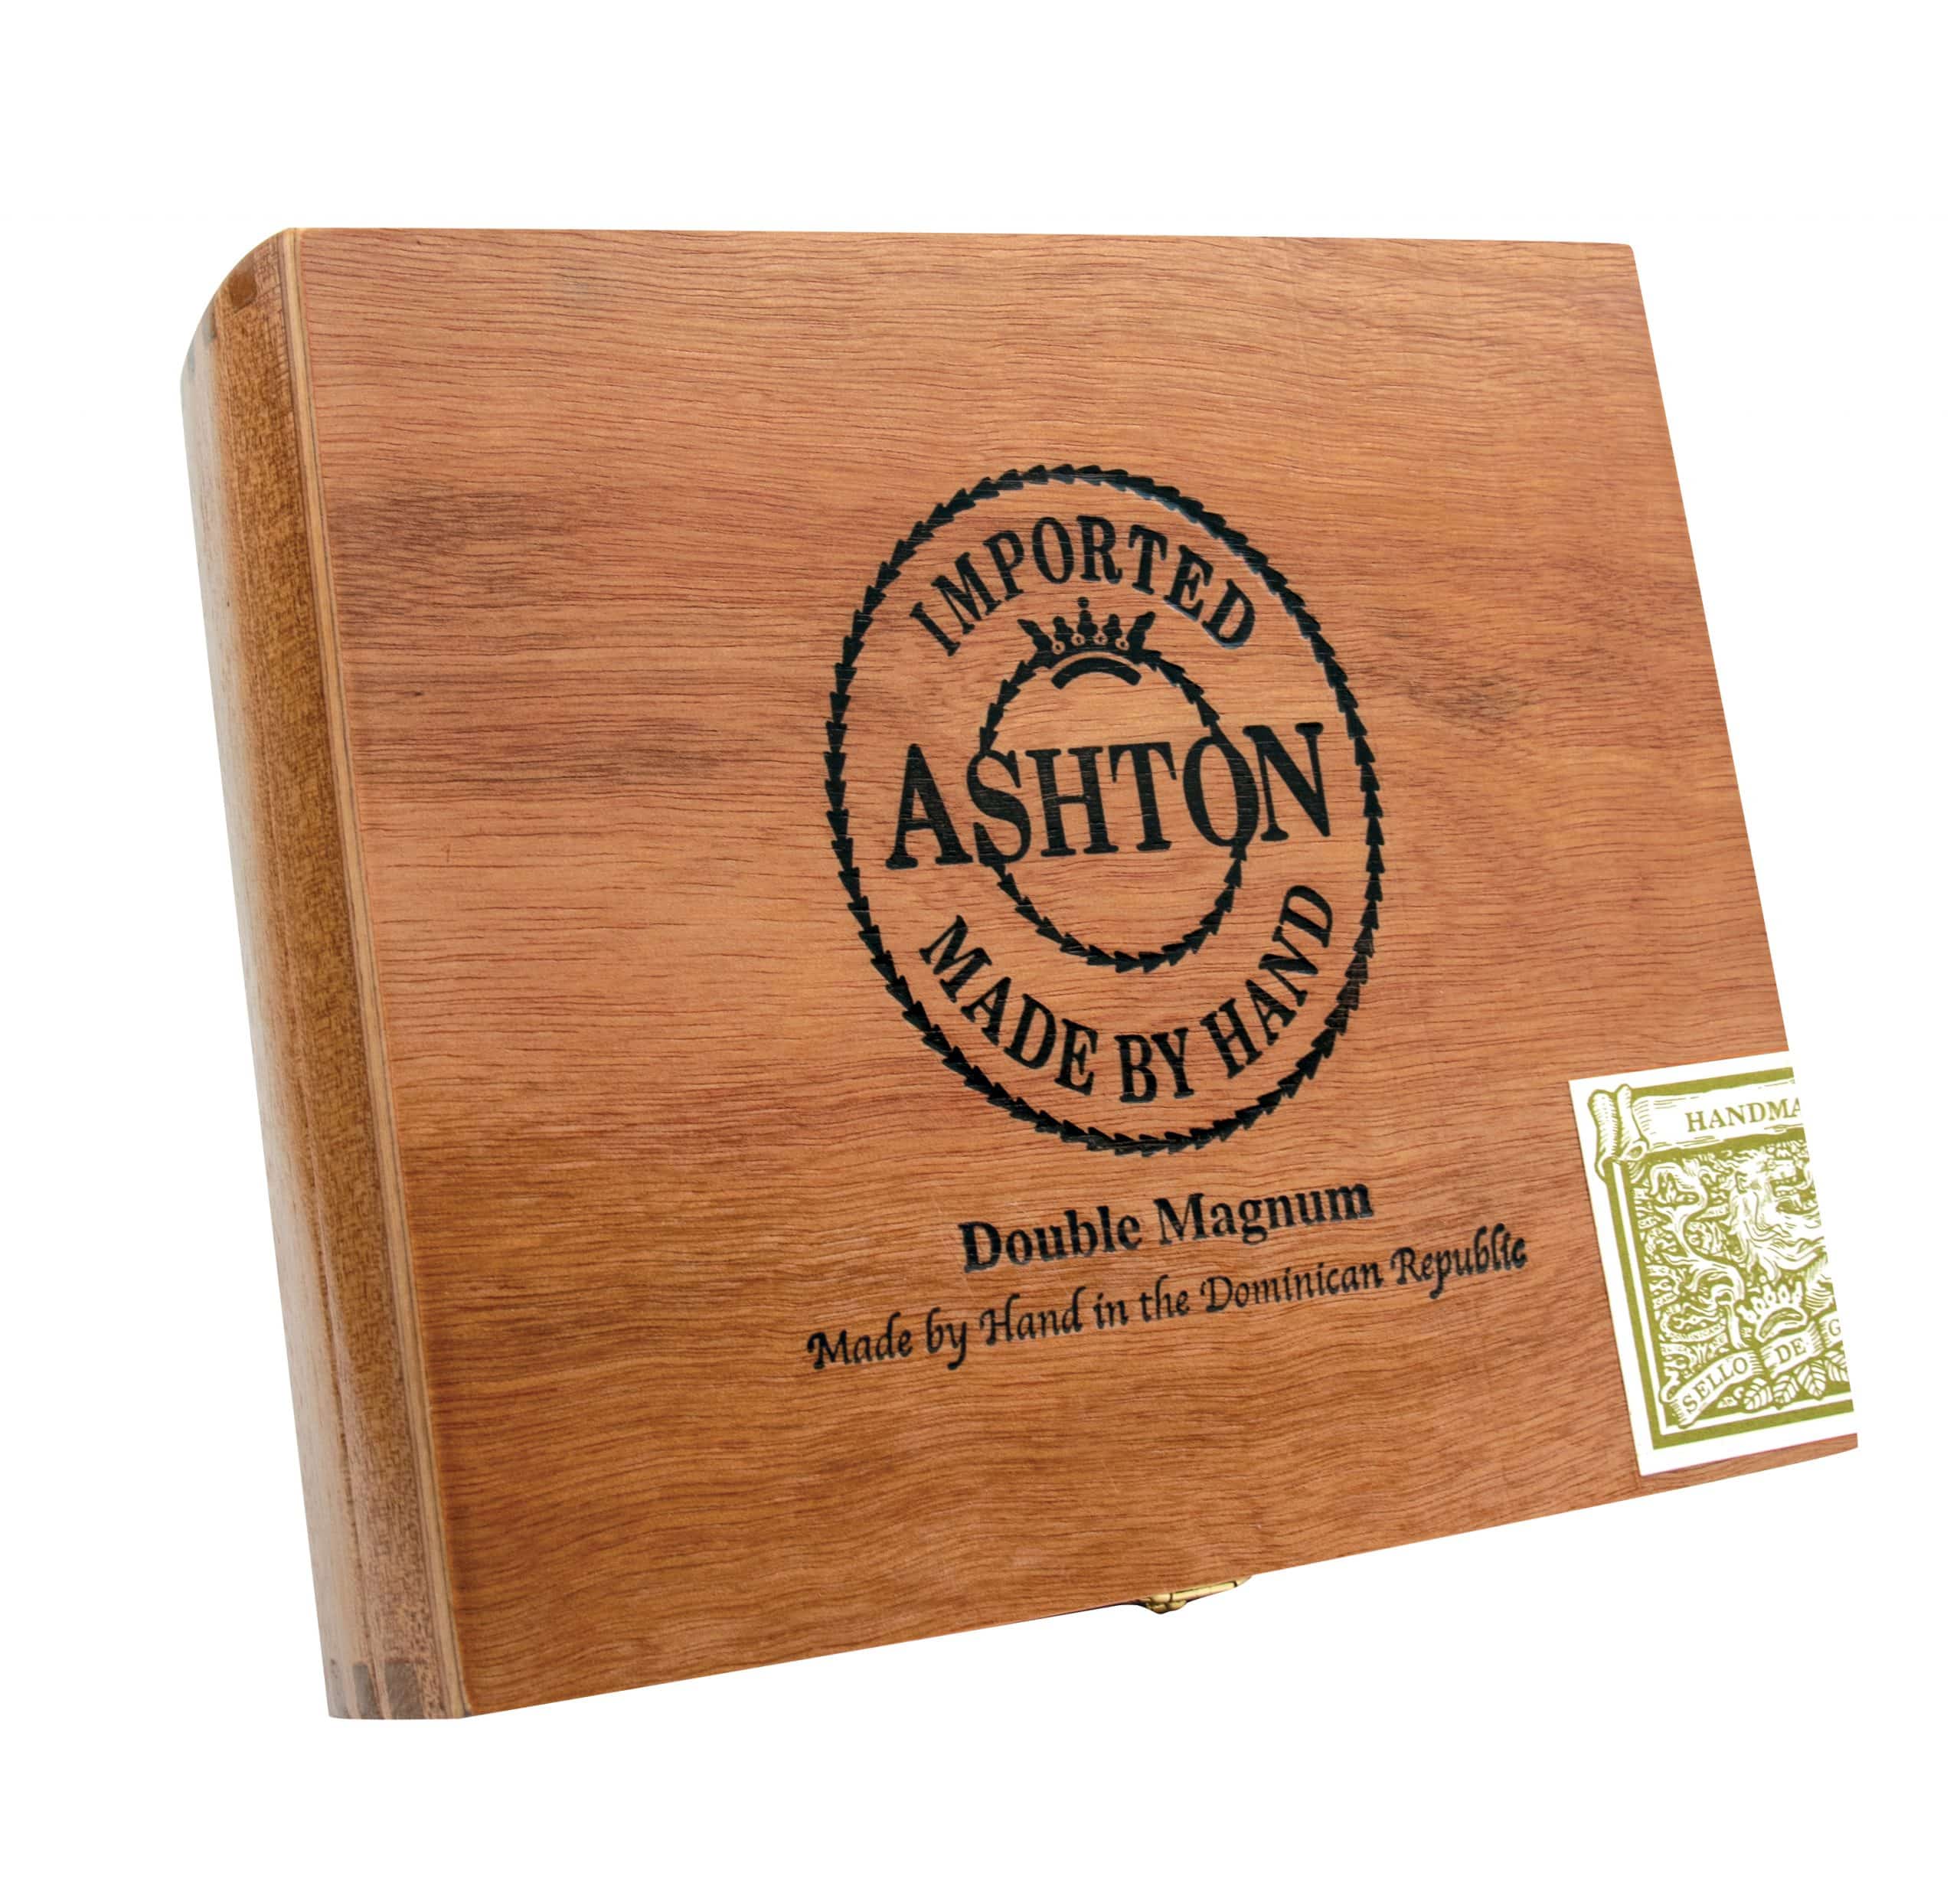 Closed box of 25 count Ashton Double Magnum cigars